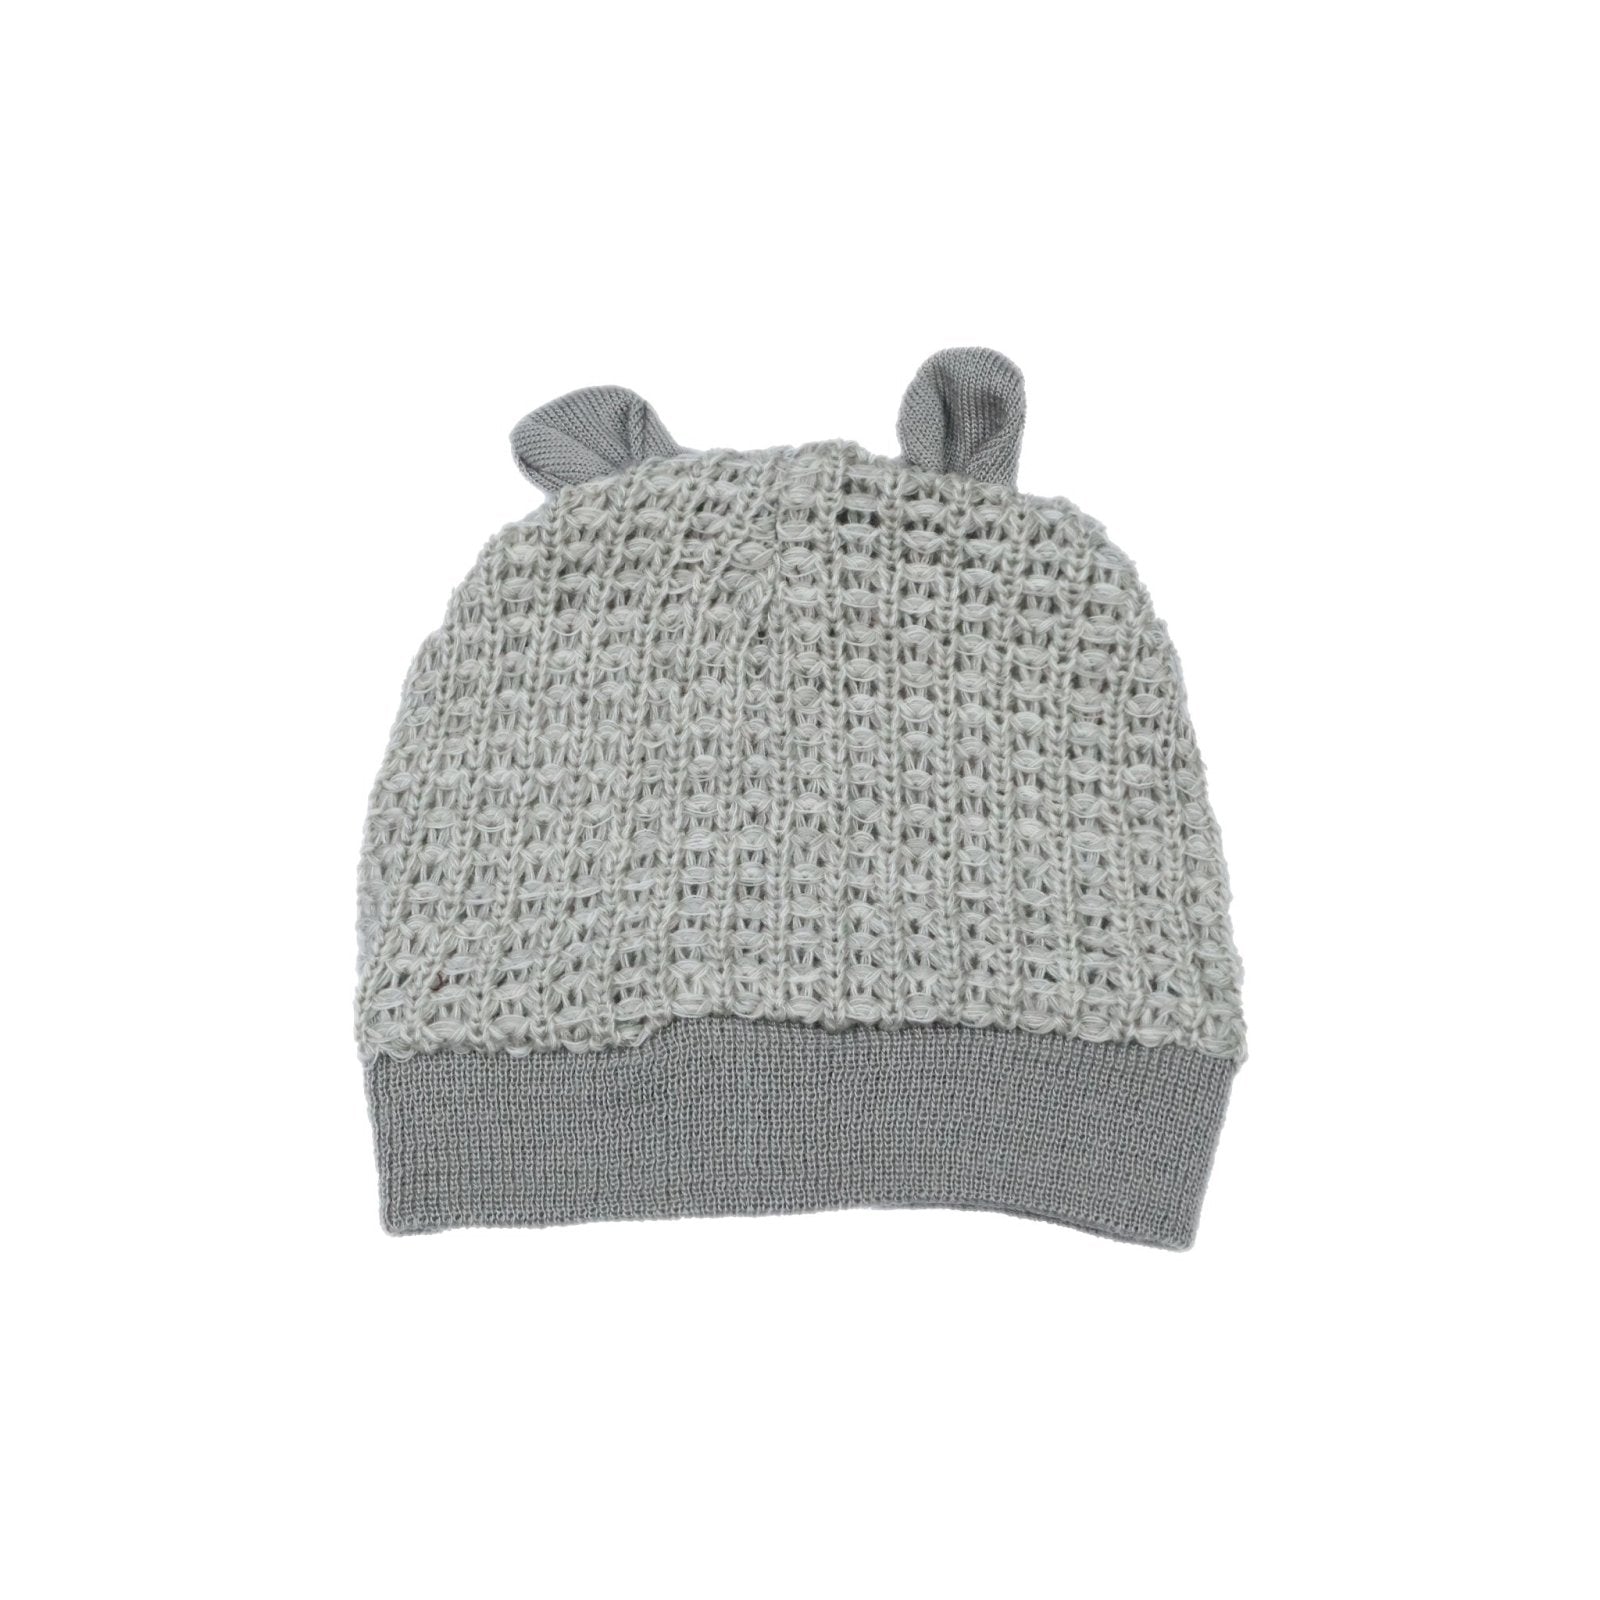 4 Pcs Woolen Gift Set Knitting Grey Color by Little Darling